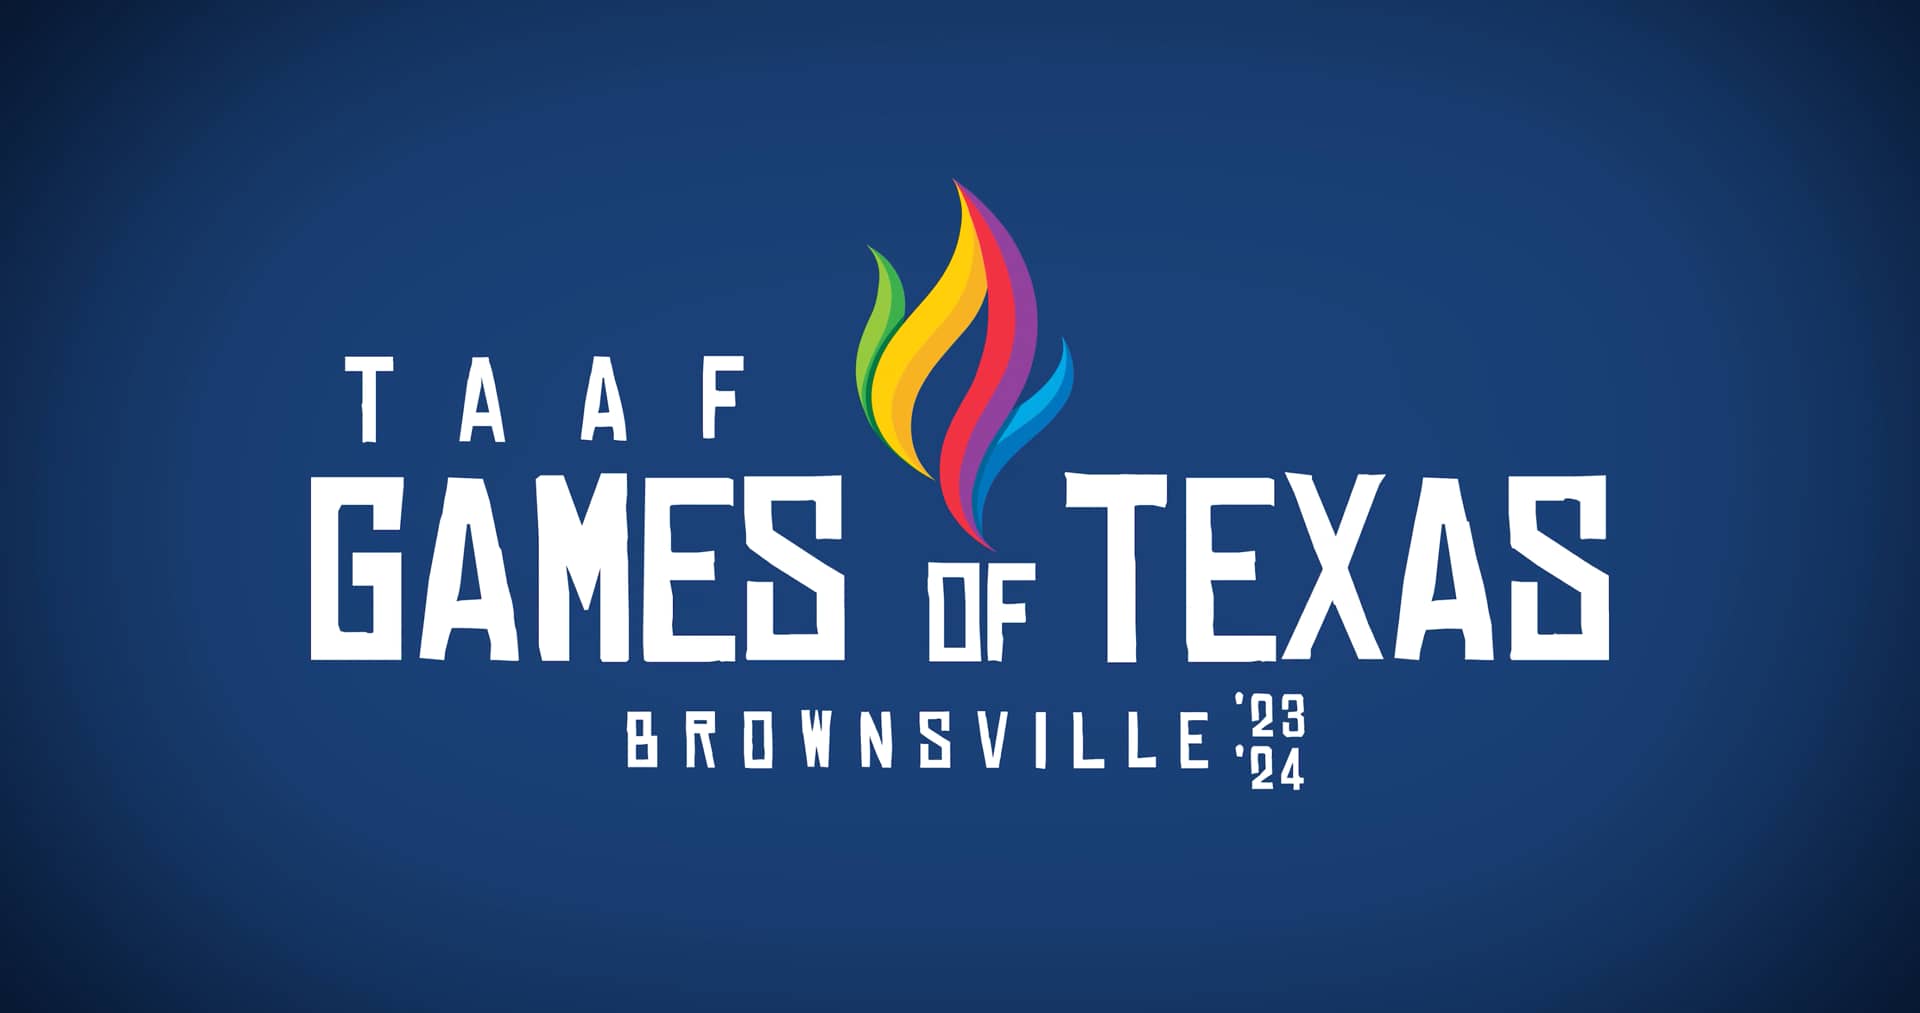 TAAF Summer Games of Texas 2023 on Vimeo